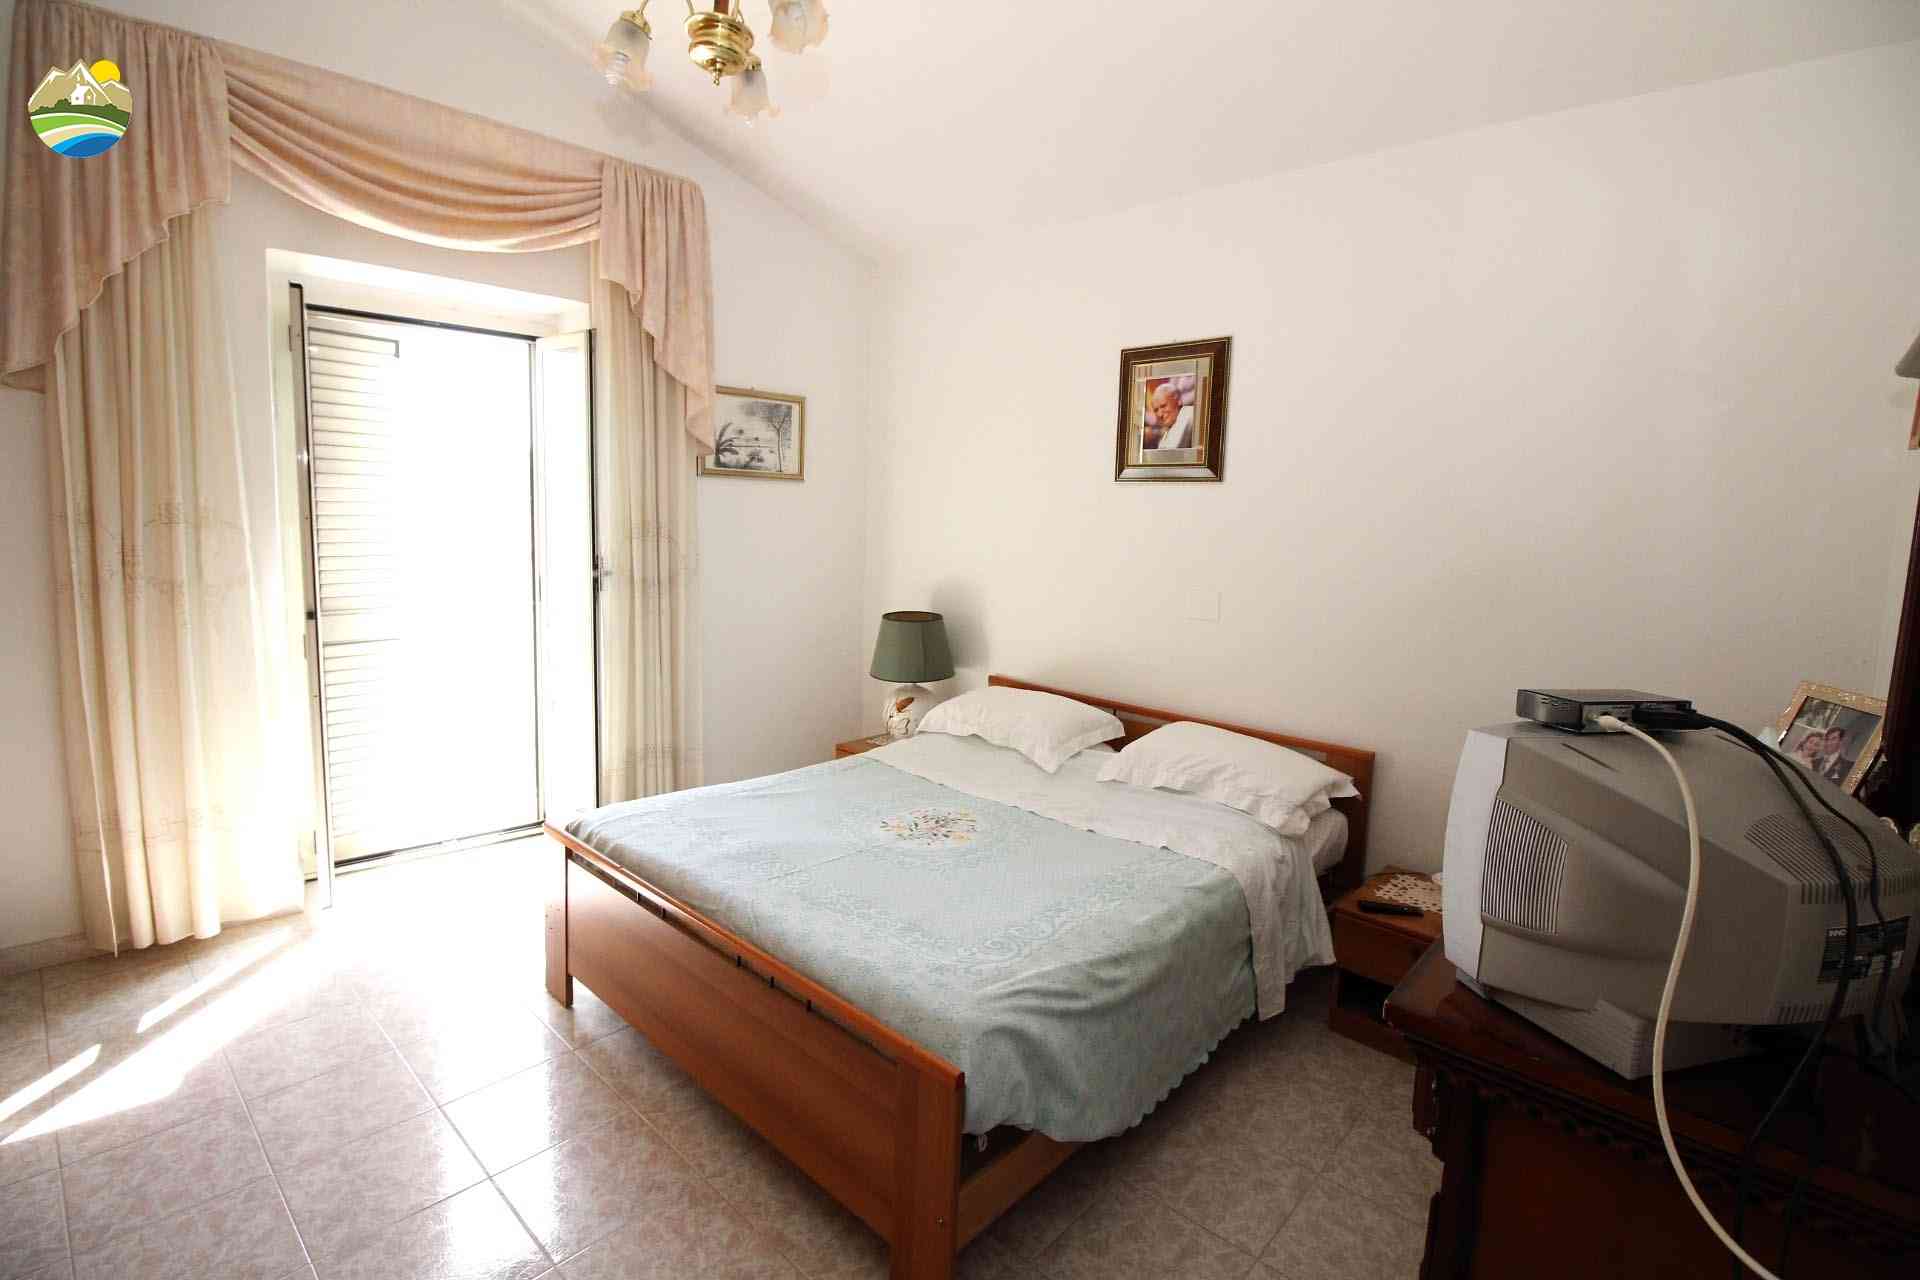 Casa in paese Casa in paese in vendita Montefino (TE), Casa Peperone - Montefino - EUR 58.435 640 small